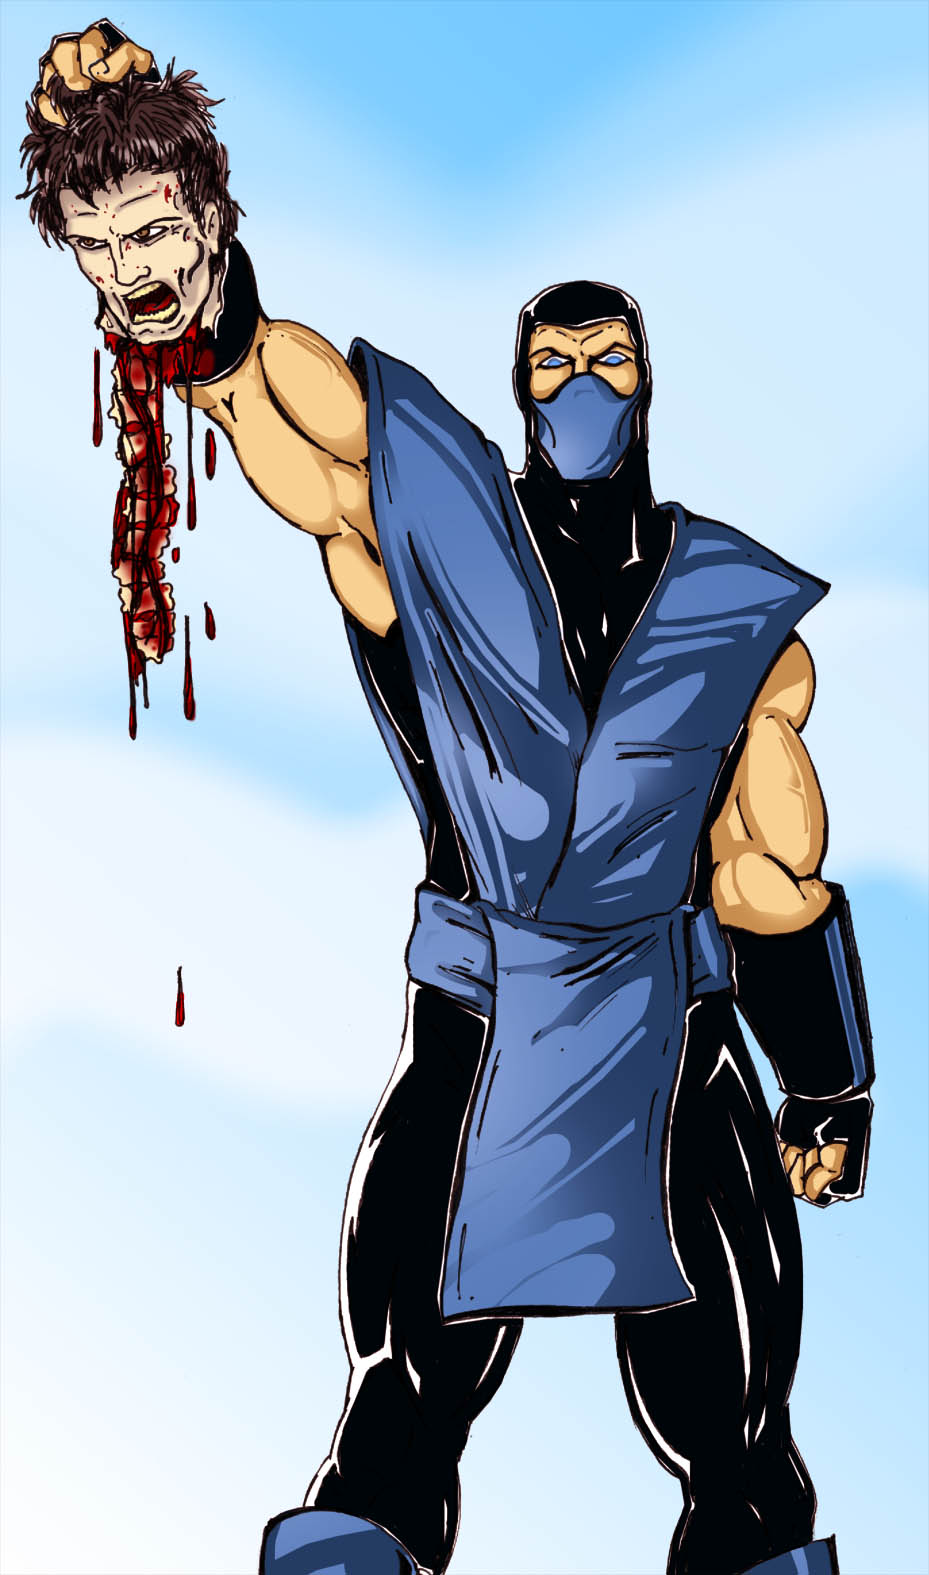 Mortal Kombat - Fatalities by Elrohironip on DeviantArt